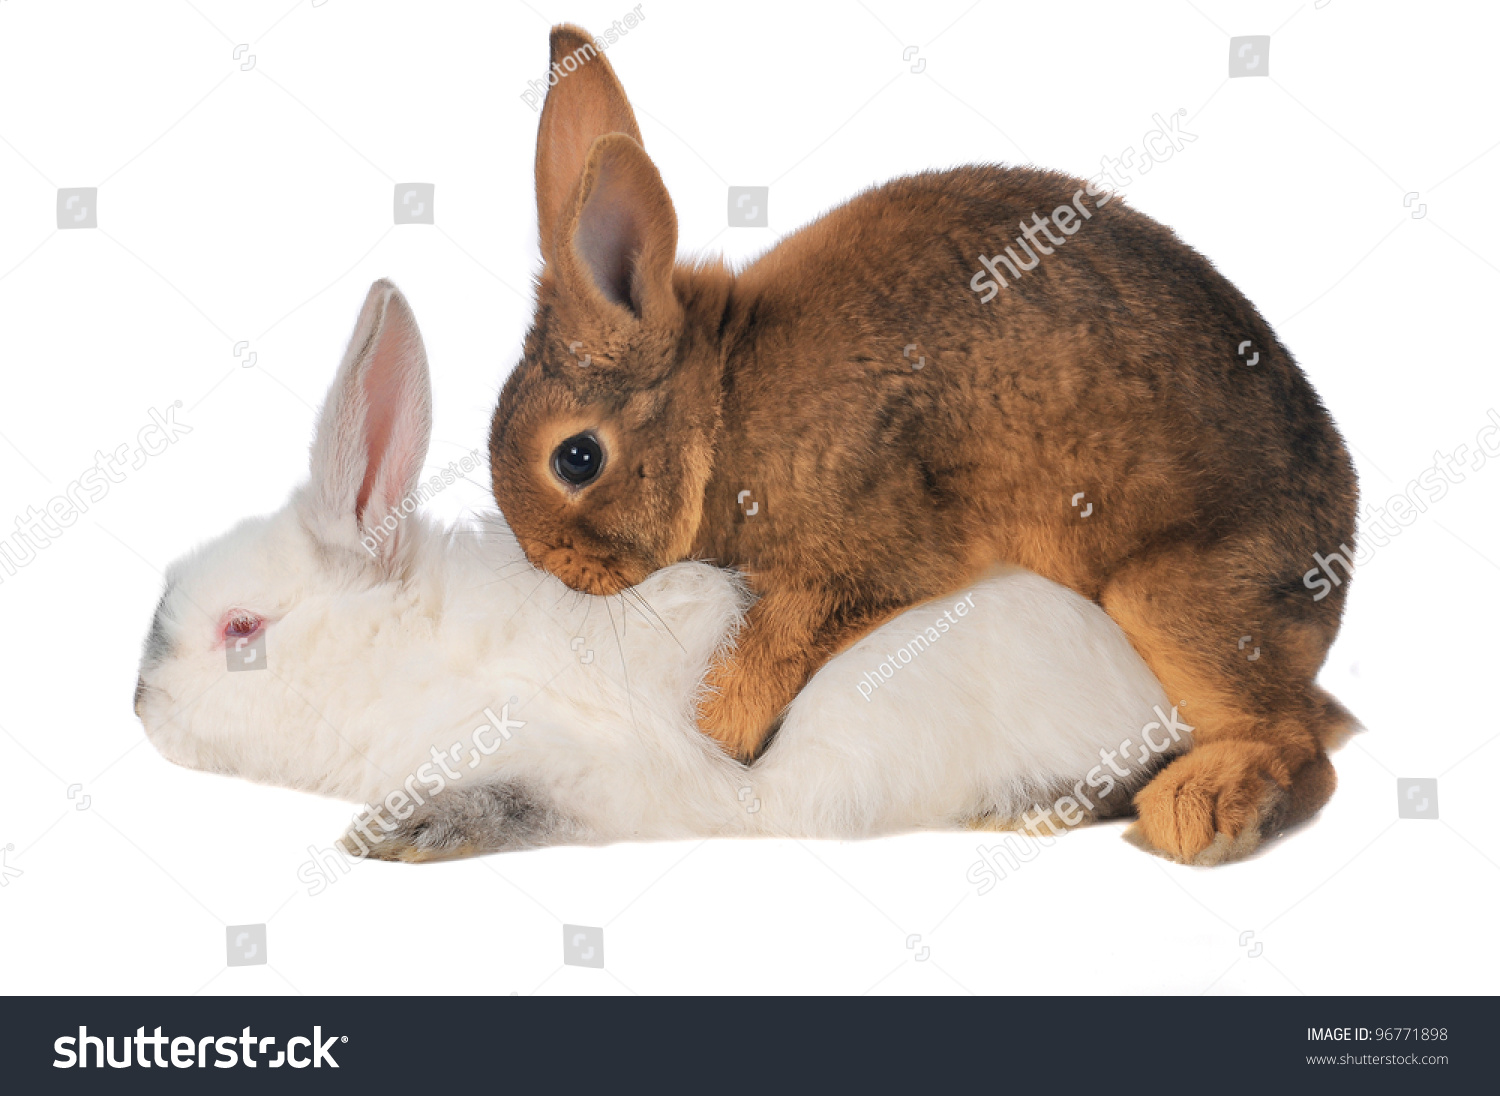 Rabbits Your Hot Teen 57